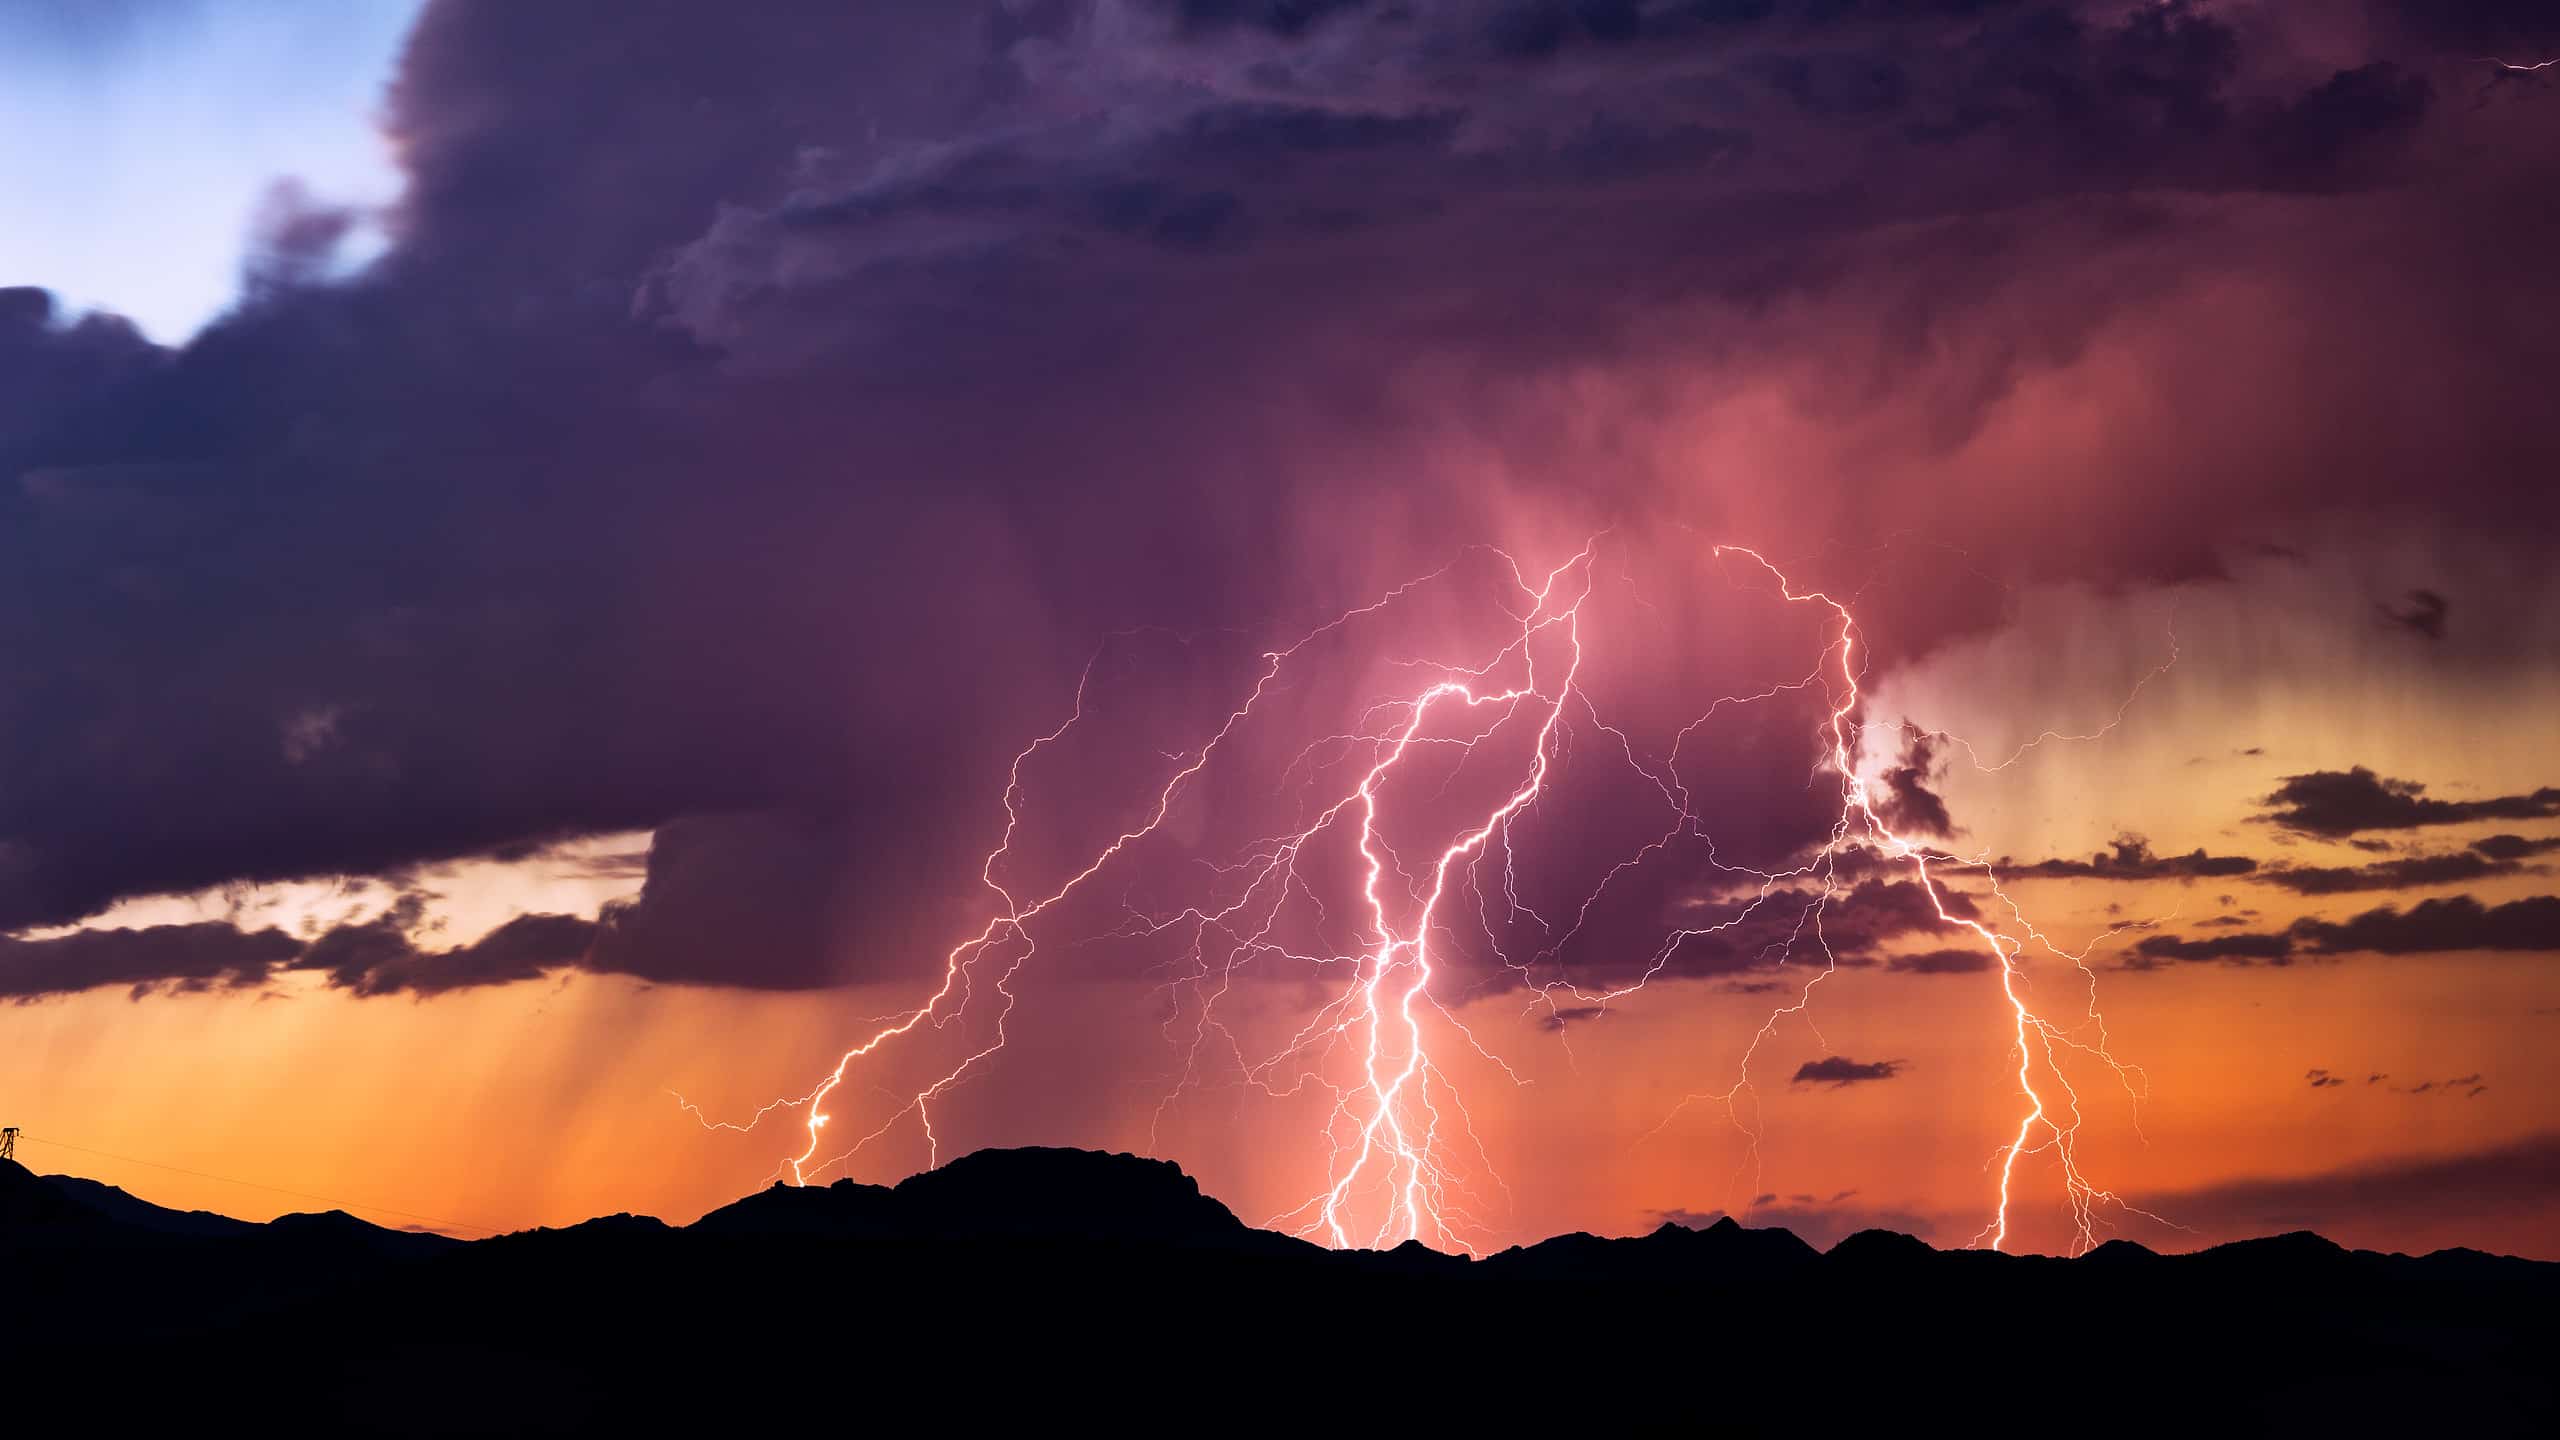 Lightning bolts strike from a sunset storm